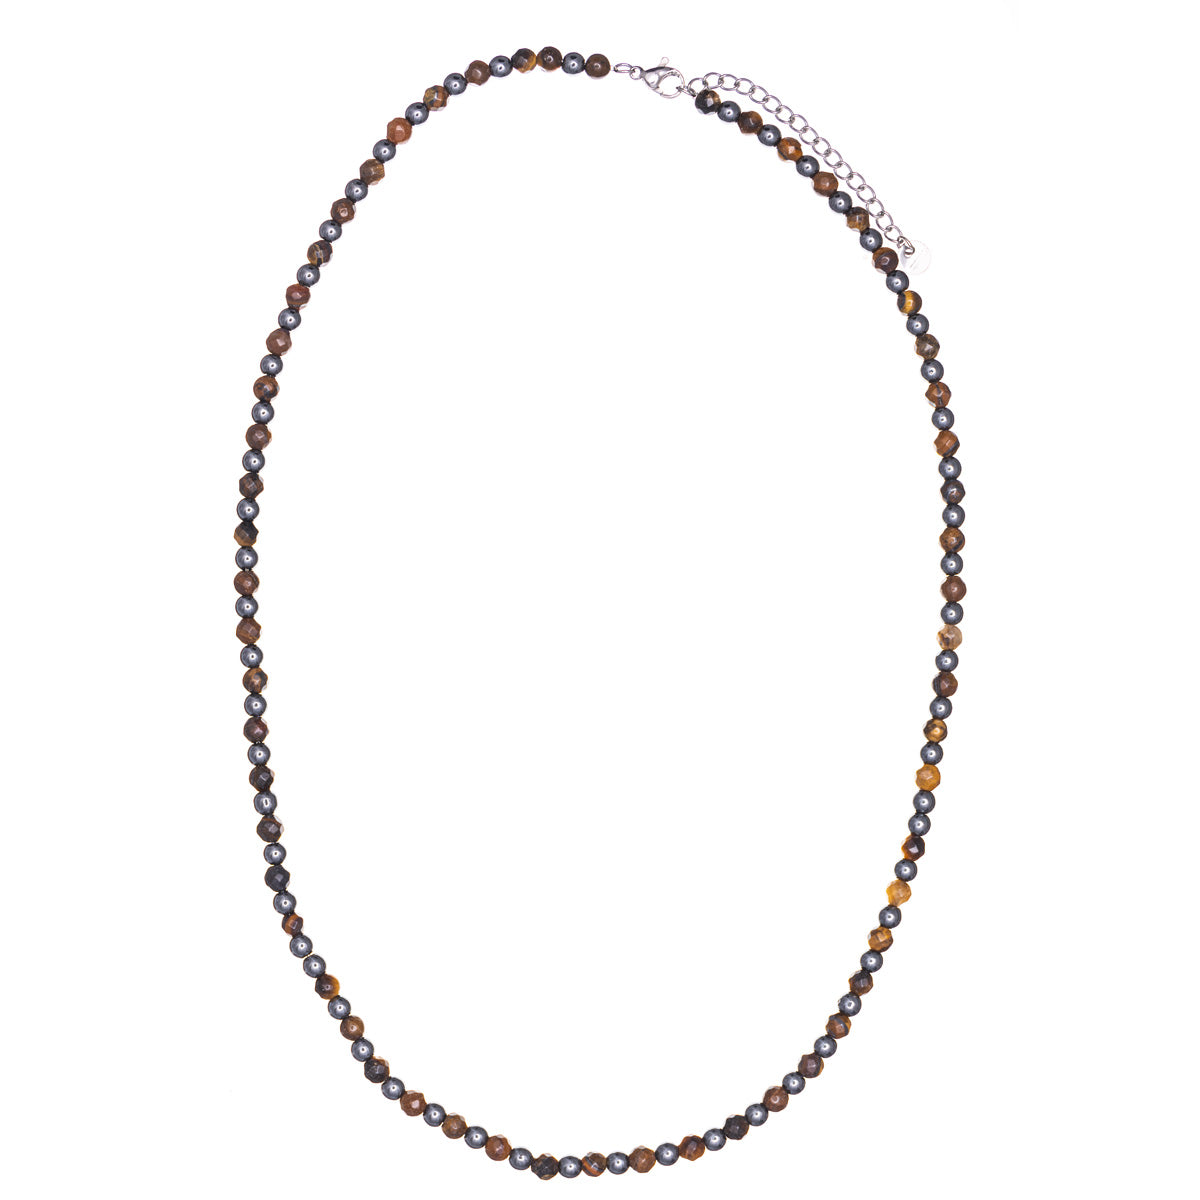 Hematite stone bead necklace on steel chain 50cm +5cm (Steel 316L)